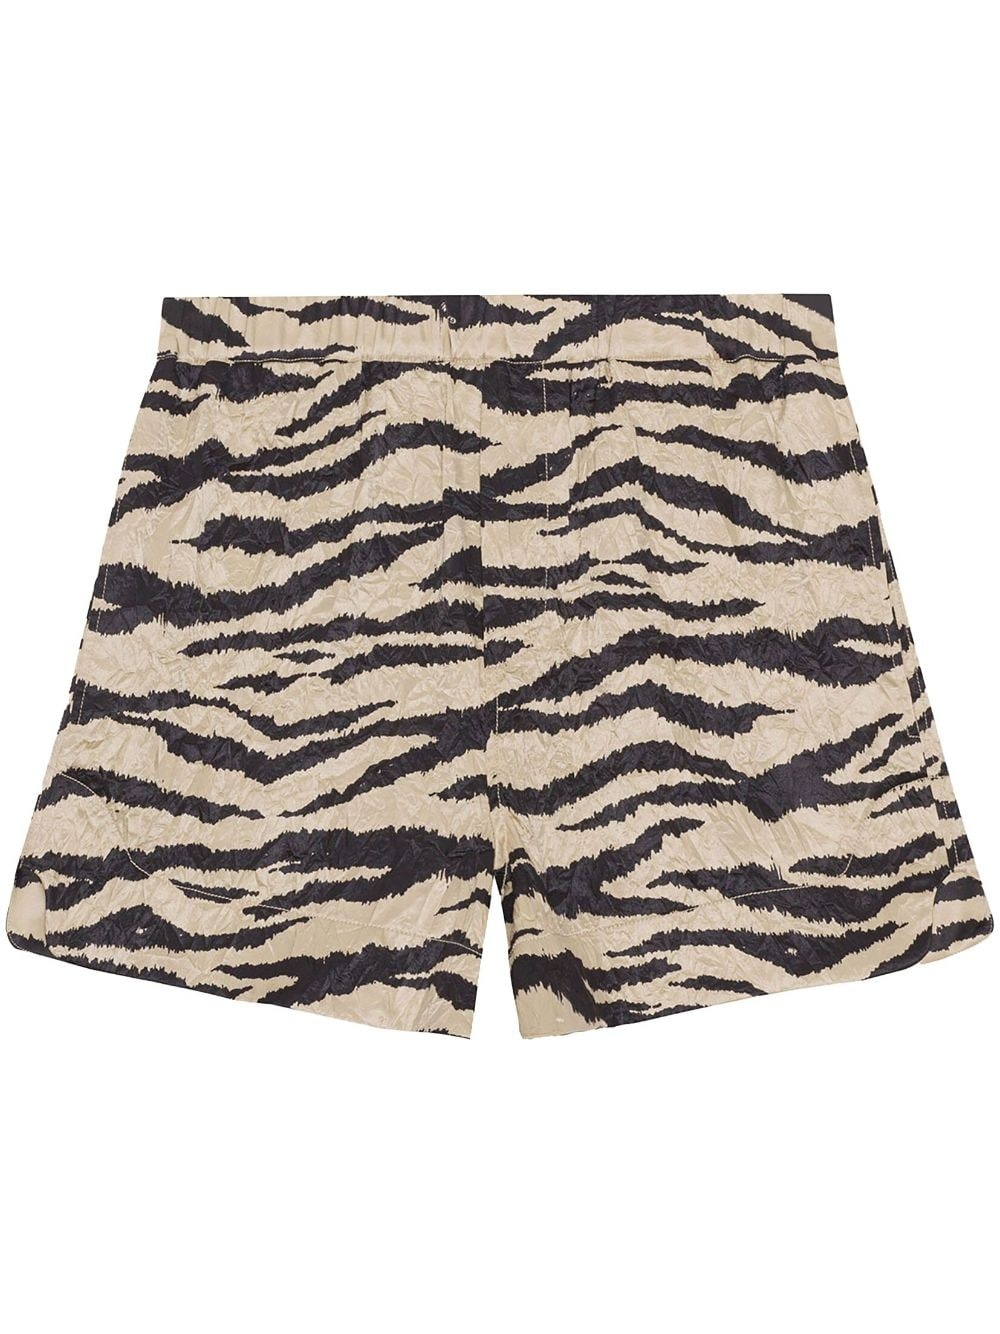 zebra-print crinked shorts - 1